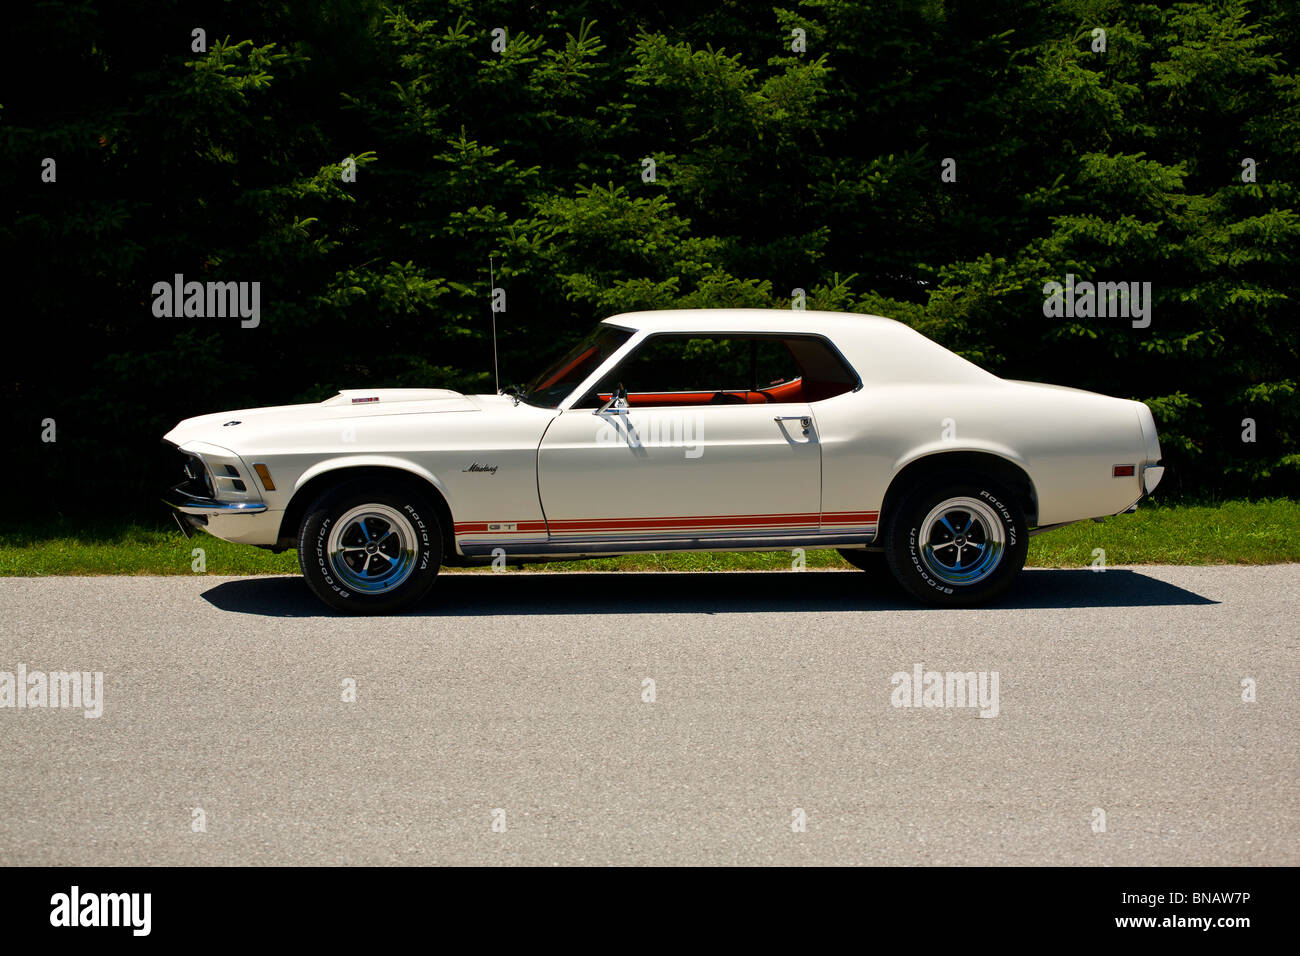 1970 Ford Mustang GT Stockfotografie - Alamy